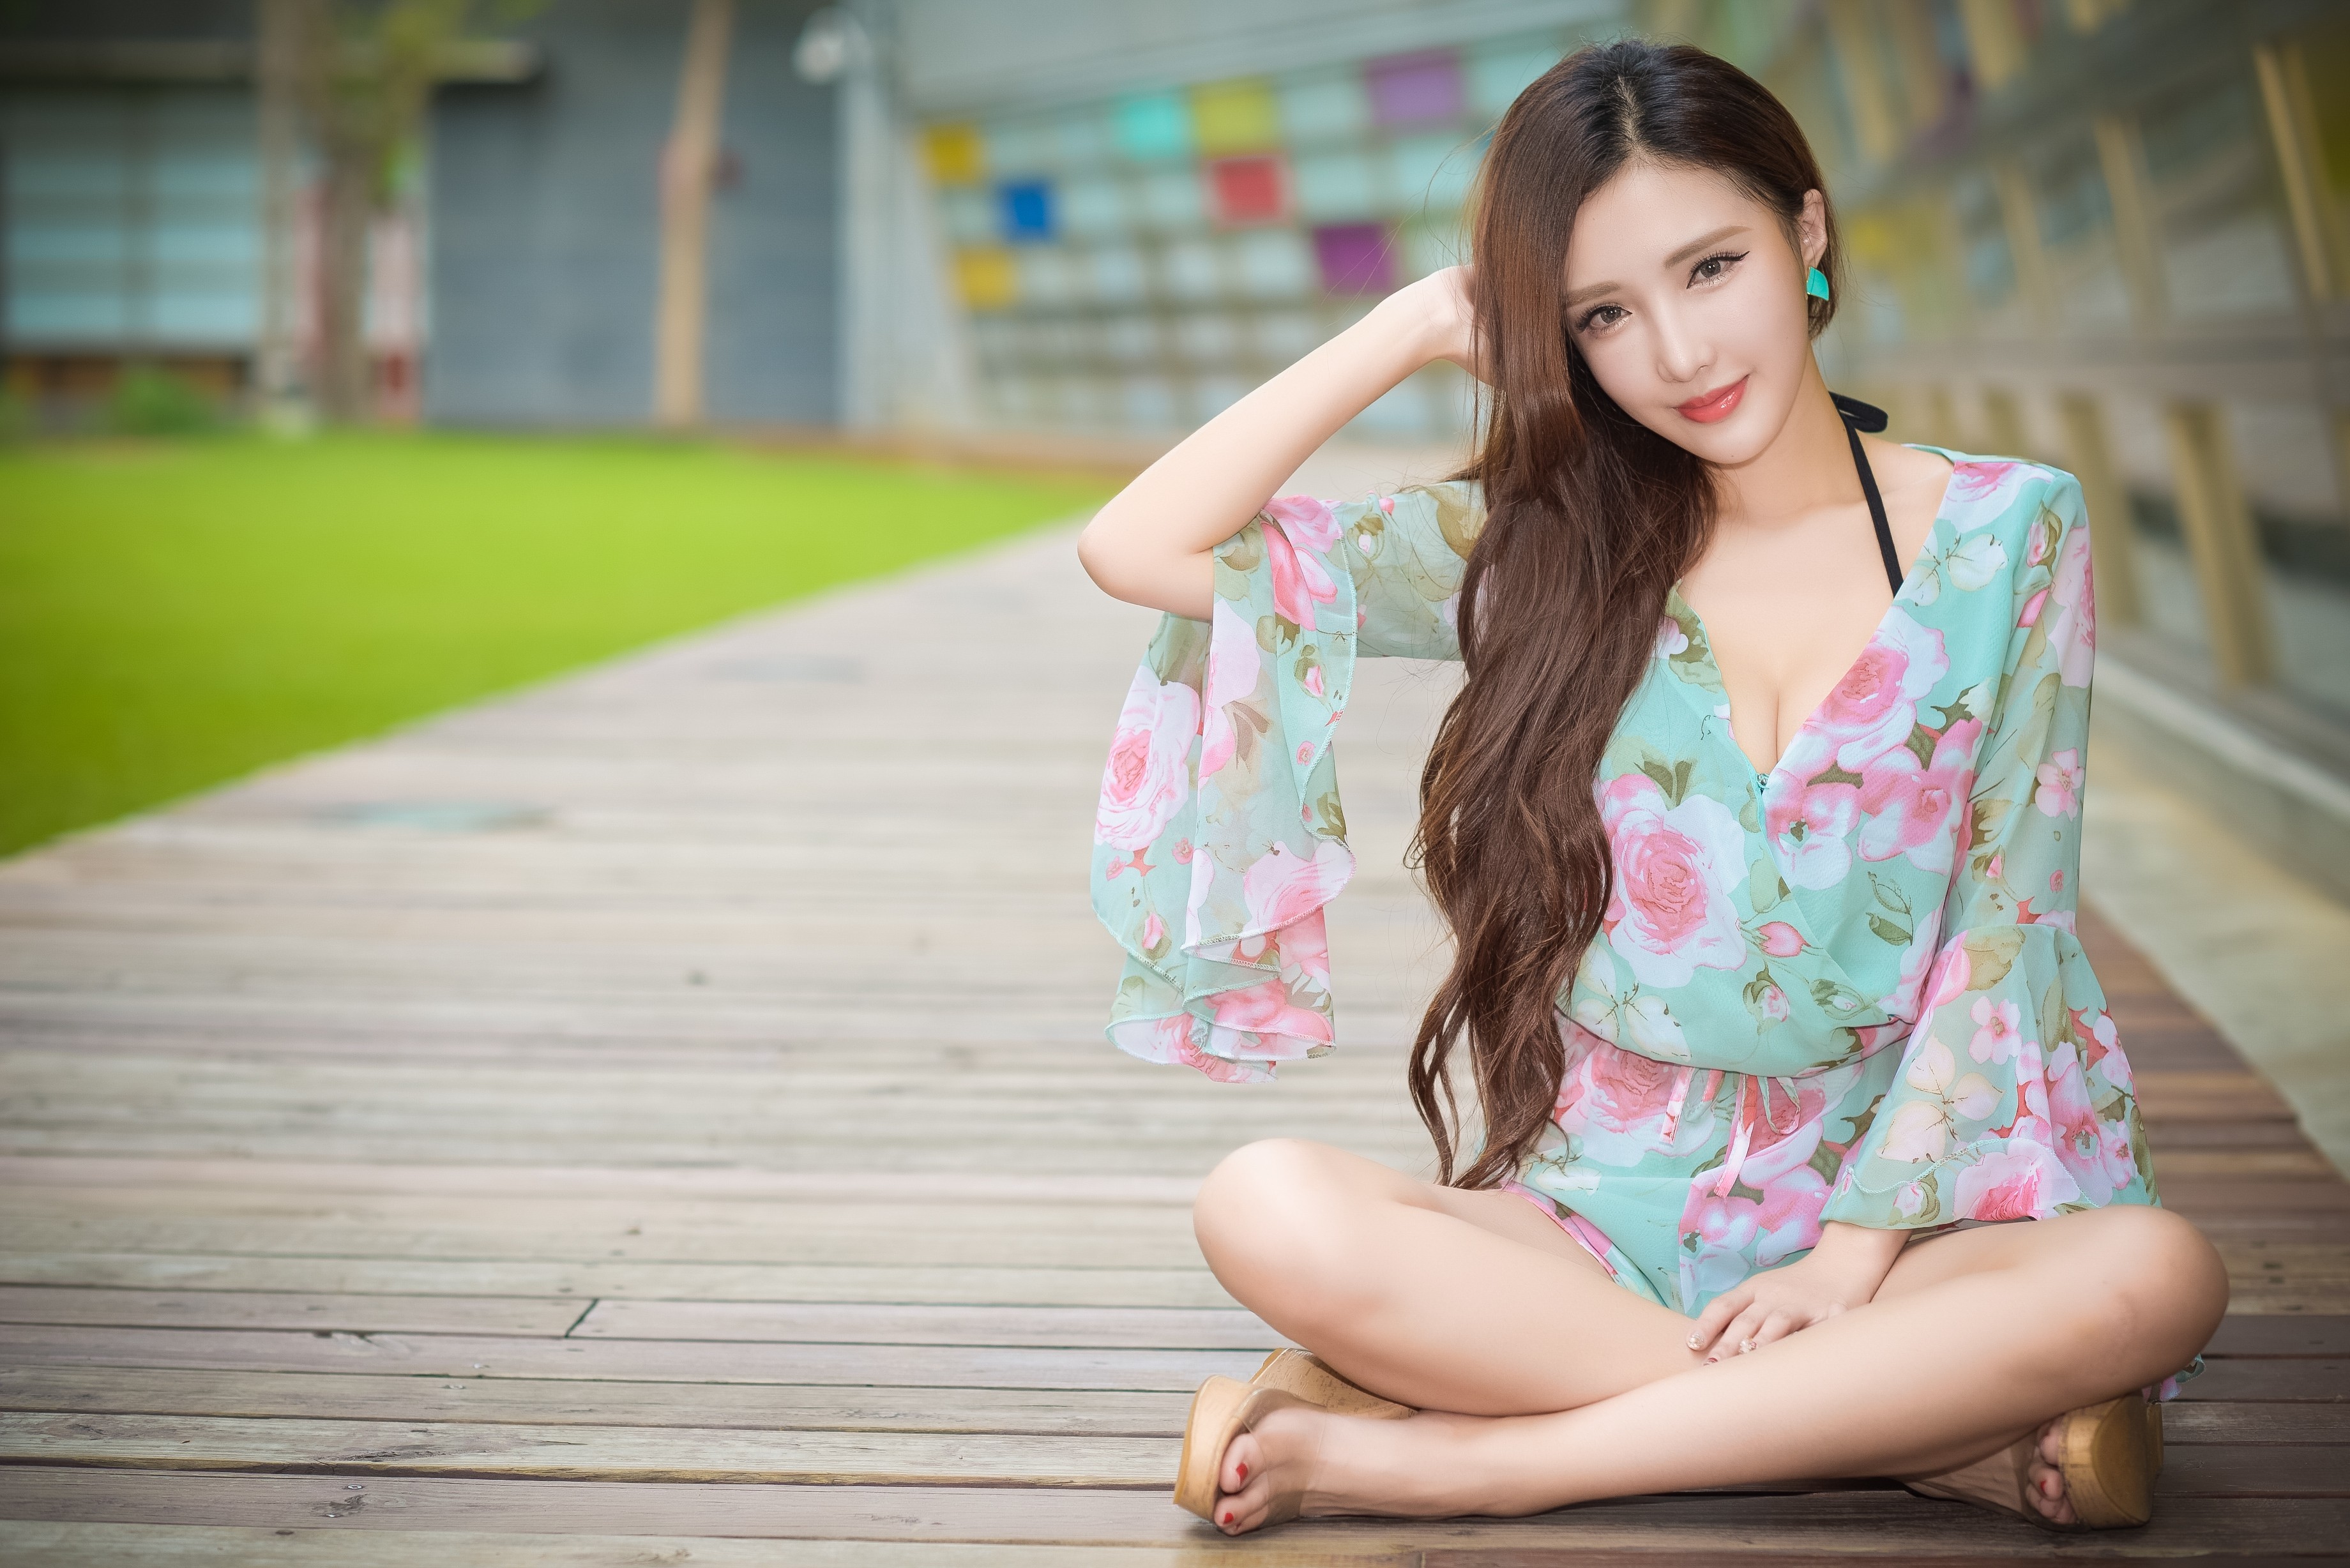 Asian Legs Crossed Women Outdoors Arms Up Long Hair Women Model Brunette Wedge Shoes Feet 3680x2456